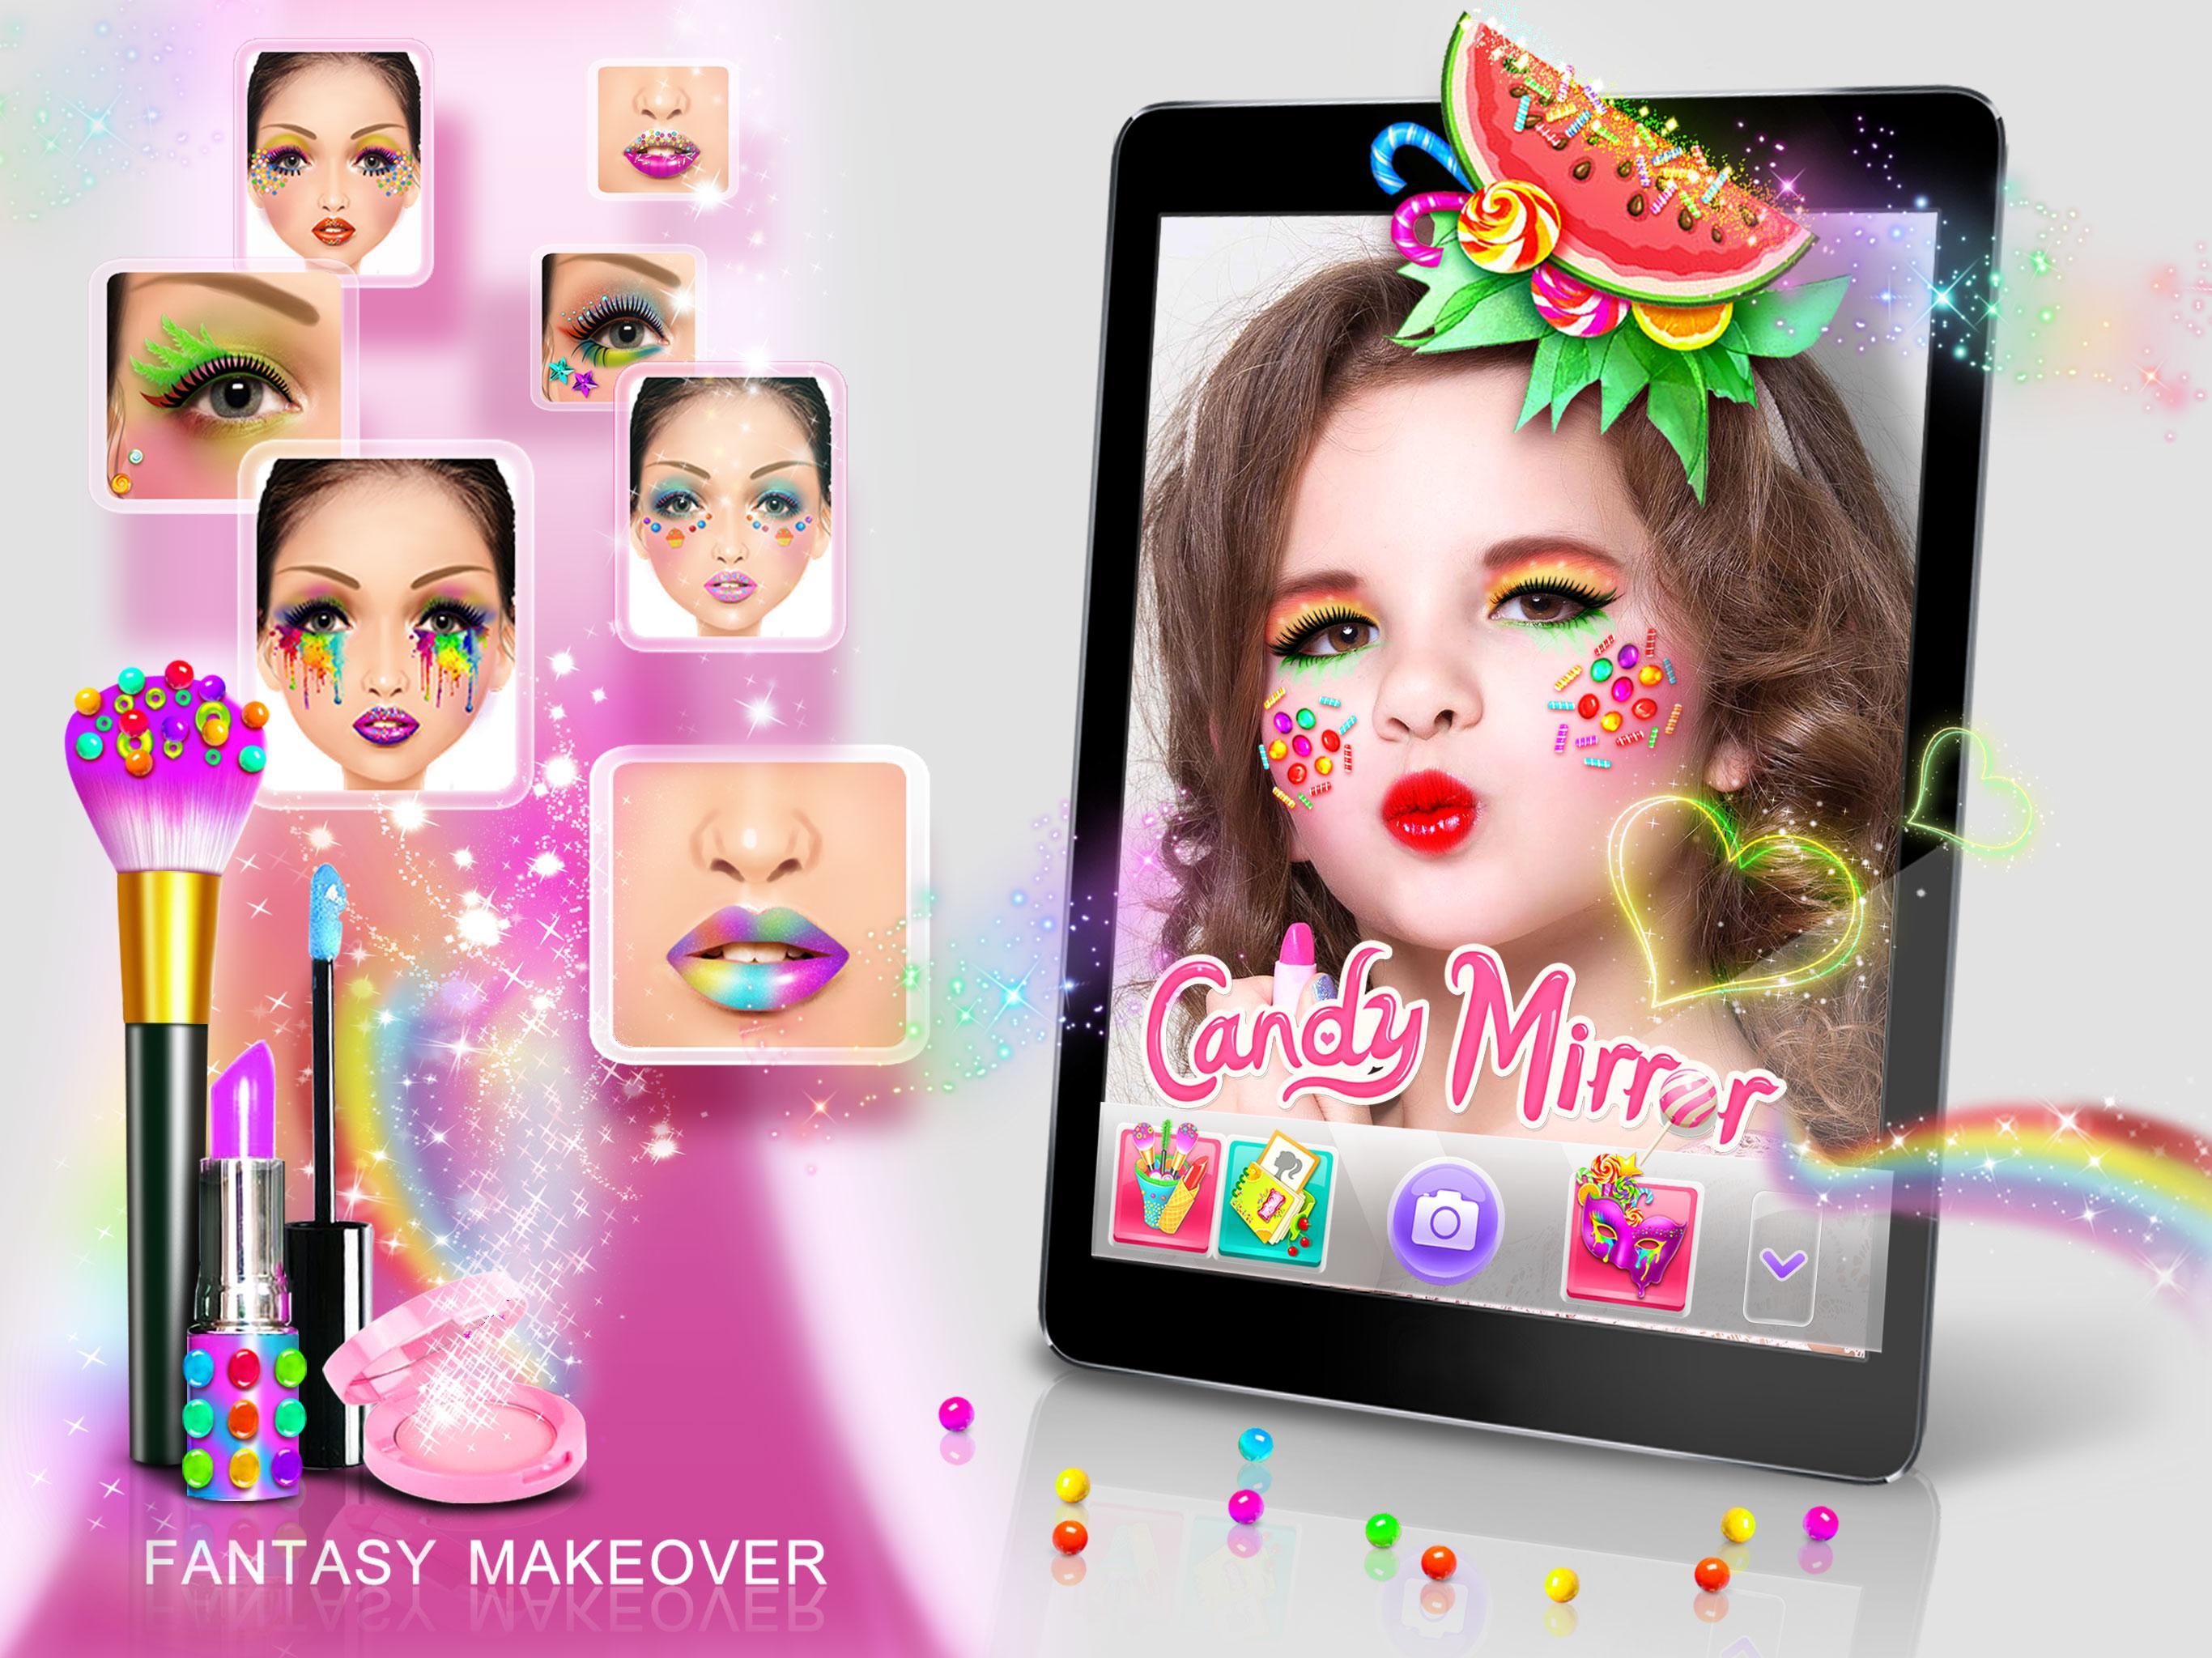 Screenshot 1 of Candy Mirror ❤ Fantasía Candy M 1.4